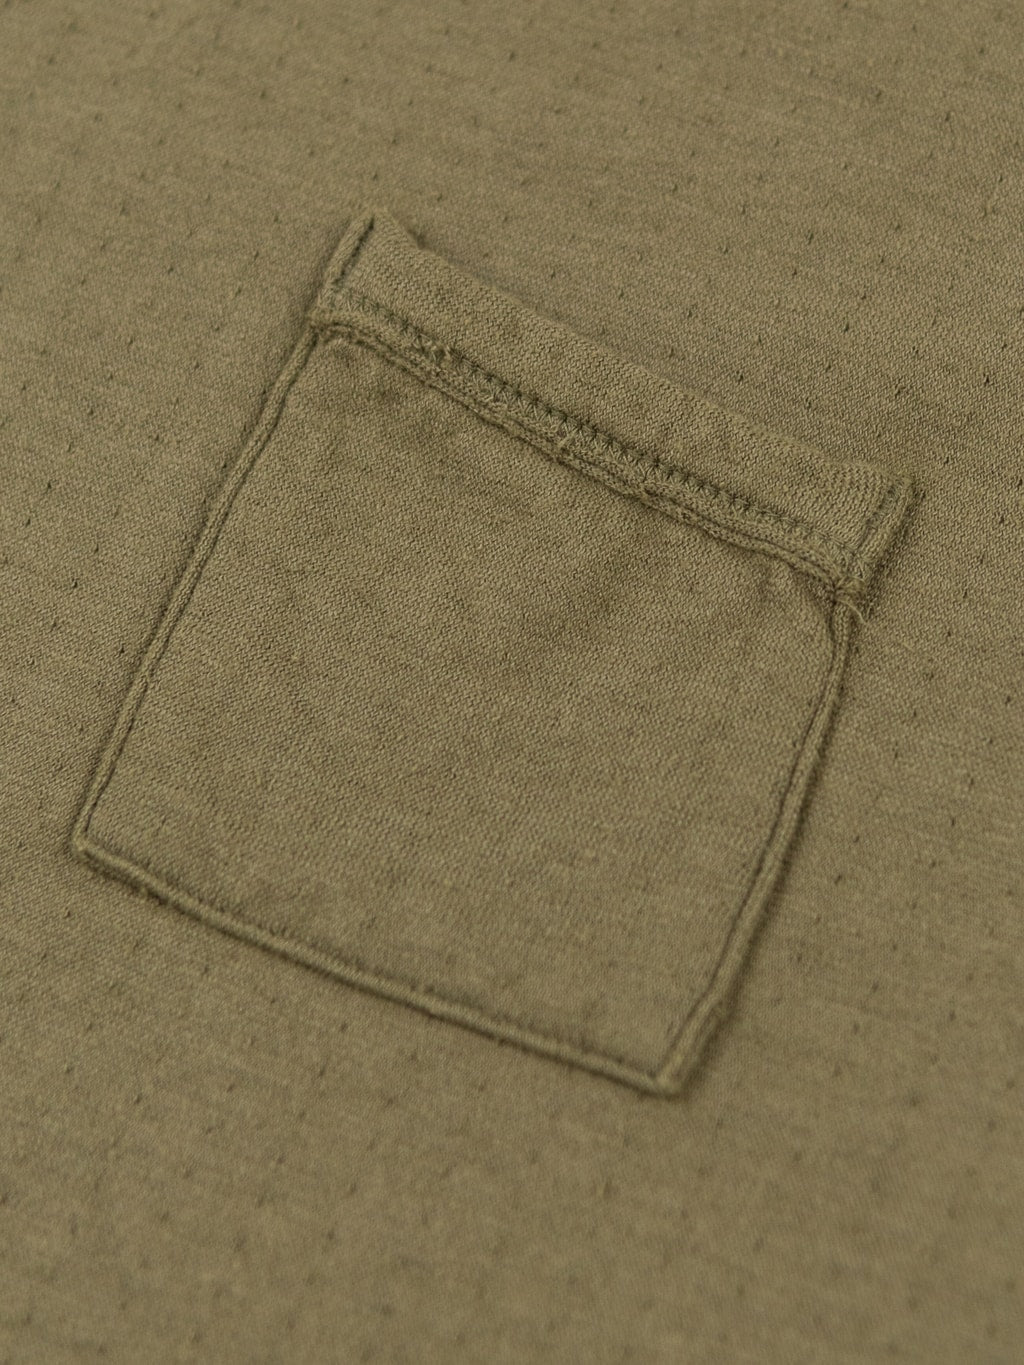 Loop and Weft Dual Layered Knit raw edge pocket TShirt olive pocket